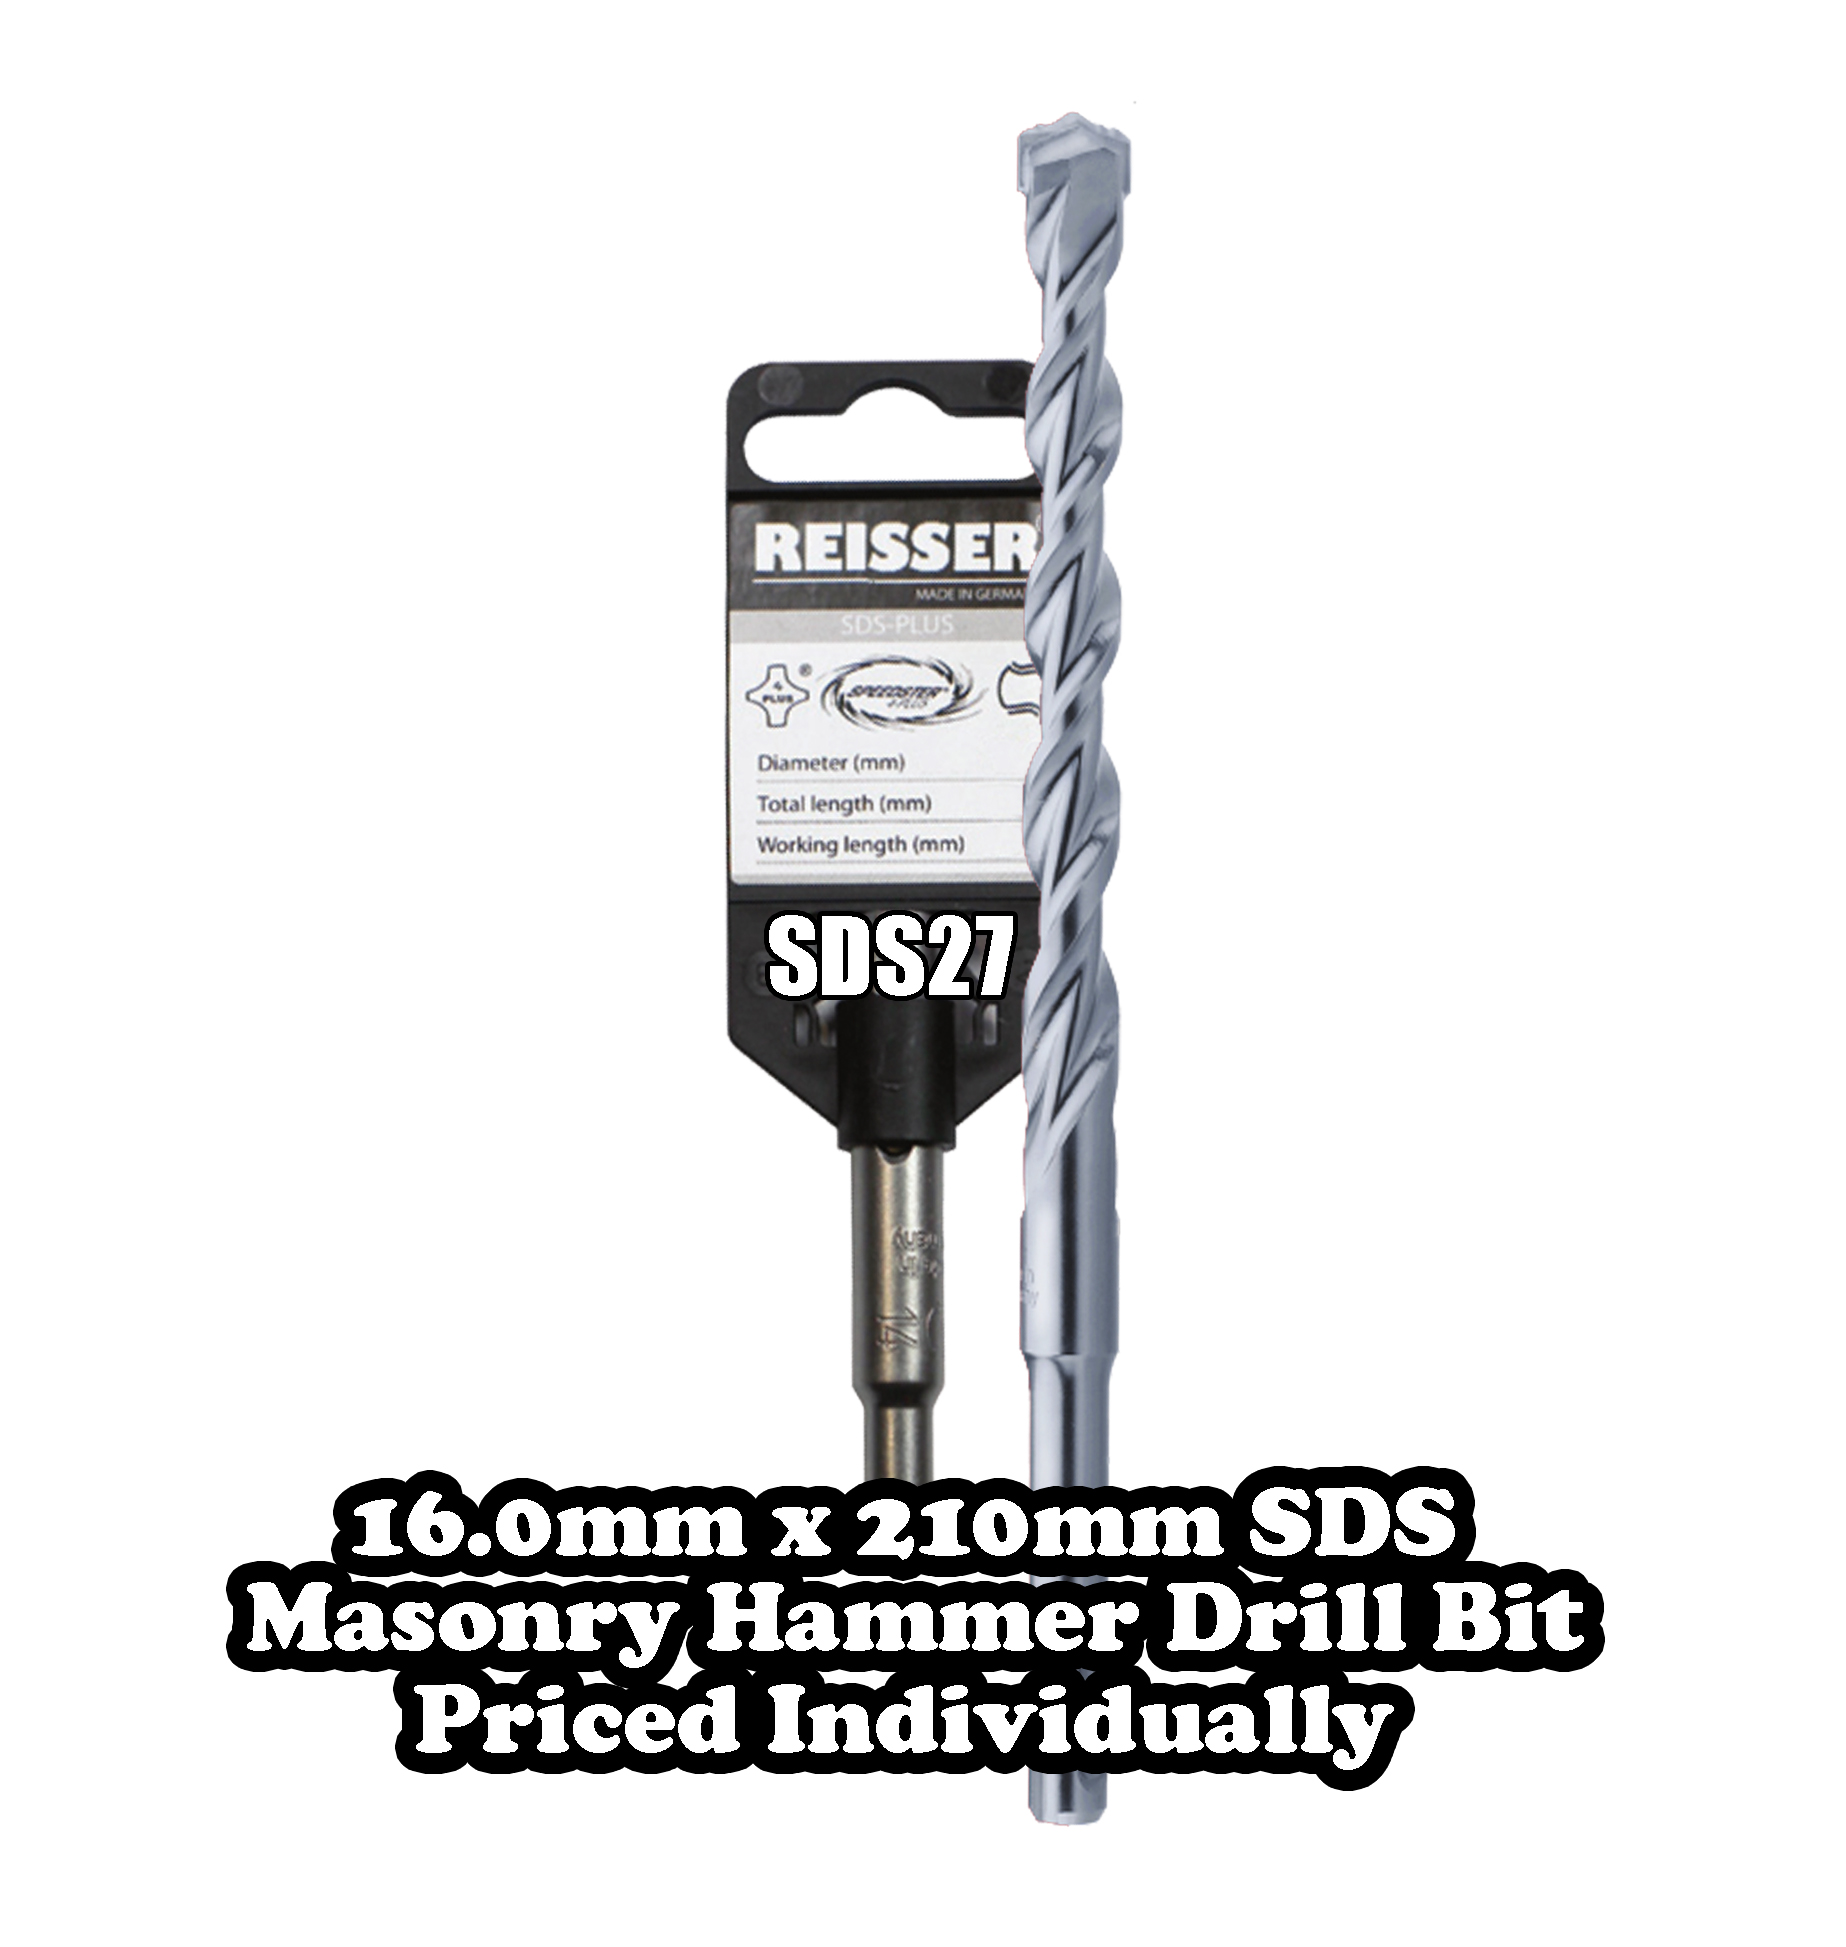 NEW PRICE 16.0mm x 210mm SDS Masonry Hammer Drill Bit